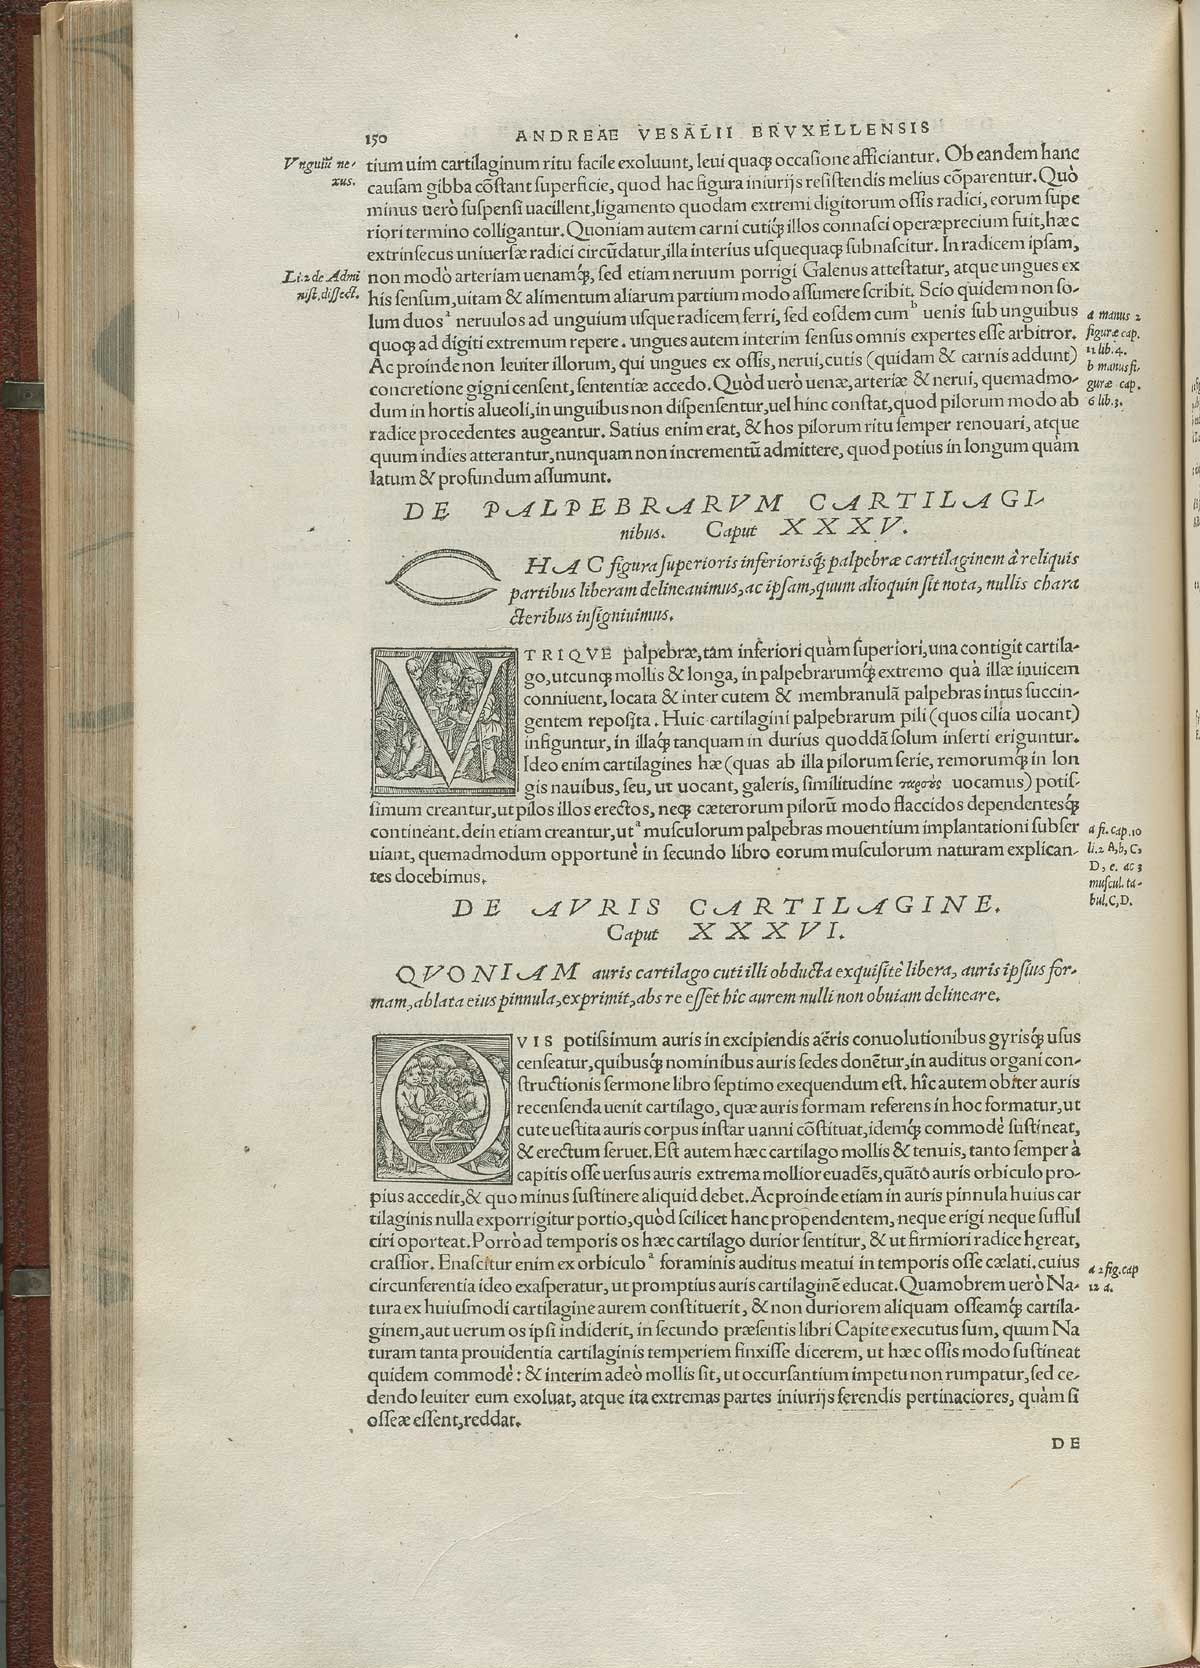 Page 150 of Andreas Vesalius' De corporis humani fabrica libri septem, featuring the vignette of cartilage.